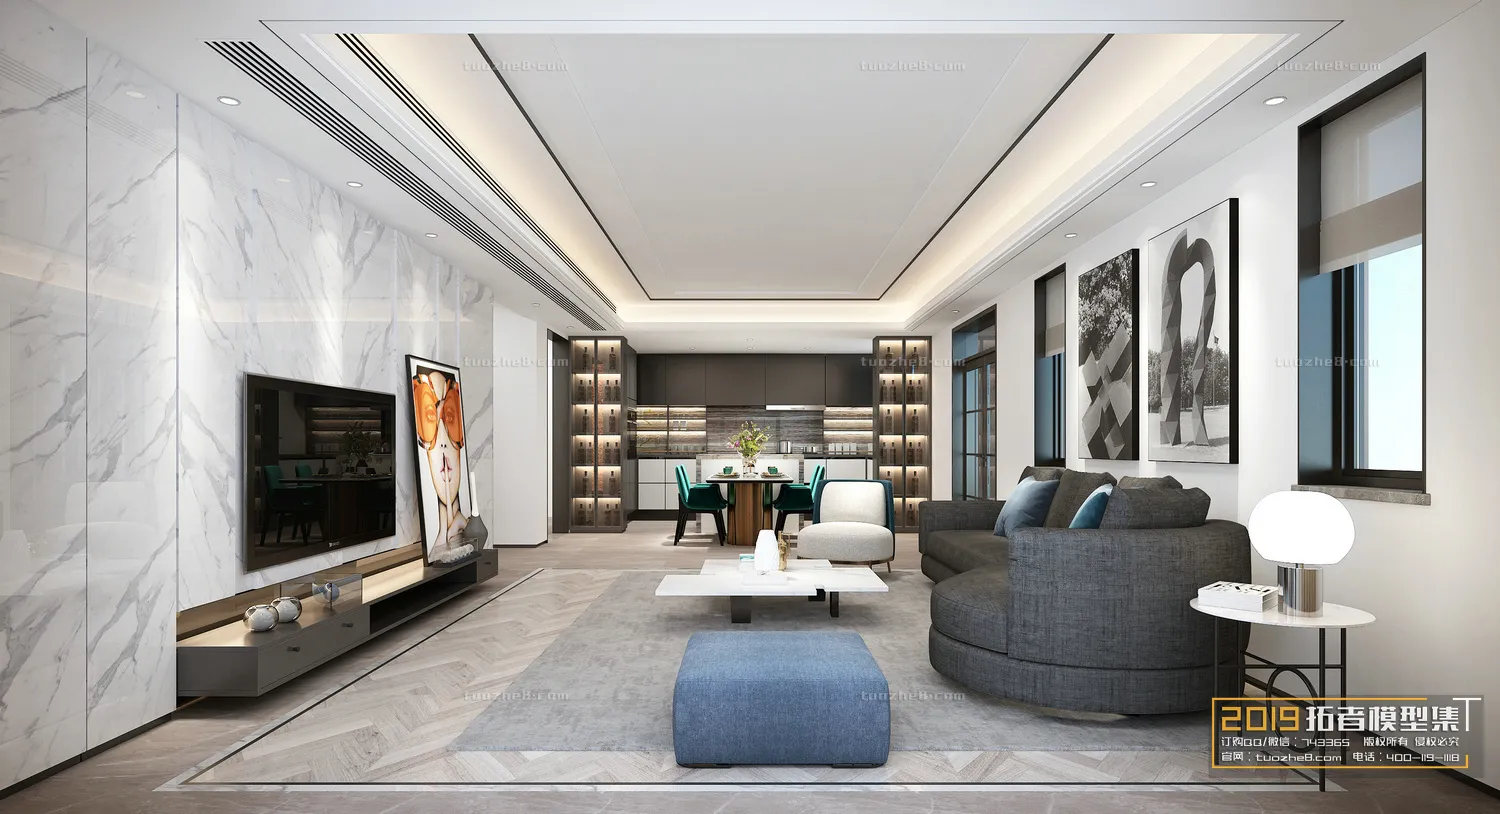 Extension Interior – LINGVING ROOM – MODERN STYLES – 035